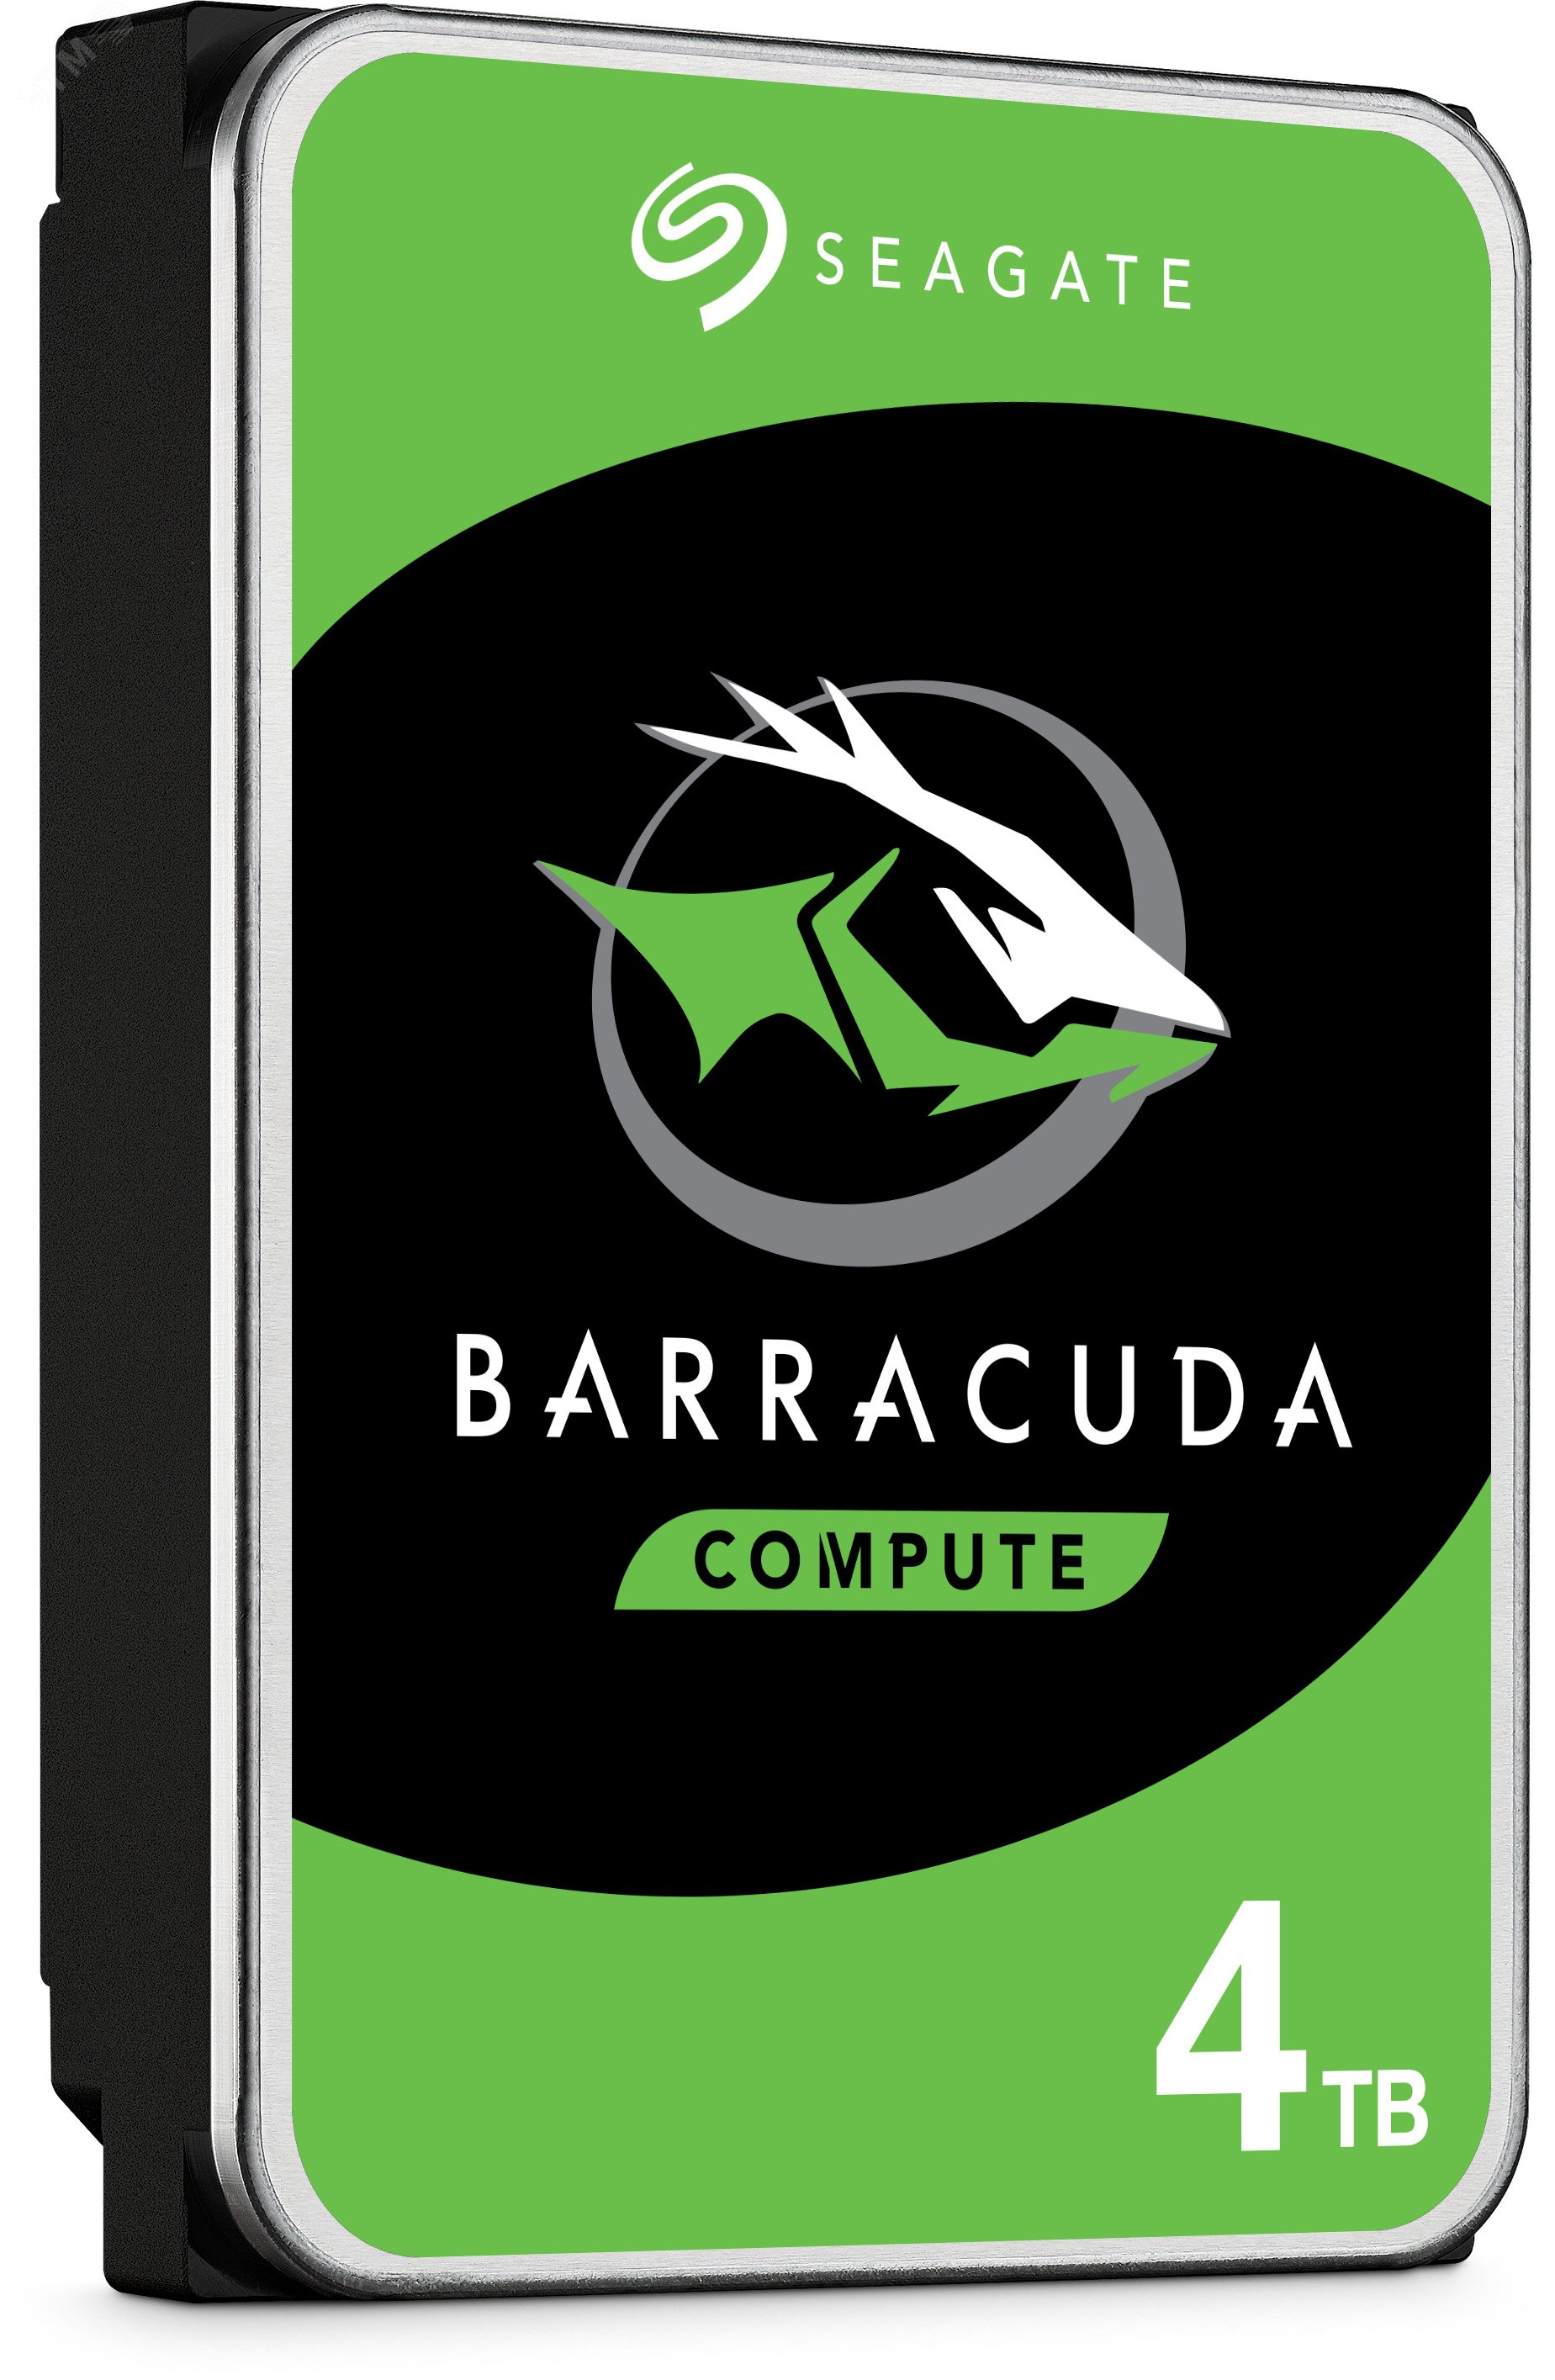 Жесткий диск 4Tb Barracuda 3.5'', SATAIII, 5400 об/мин, 256 МБ ST4000DM004 Seagate - превью 3